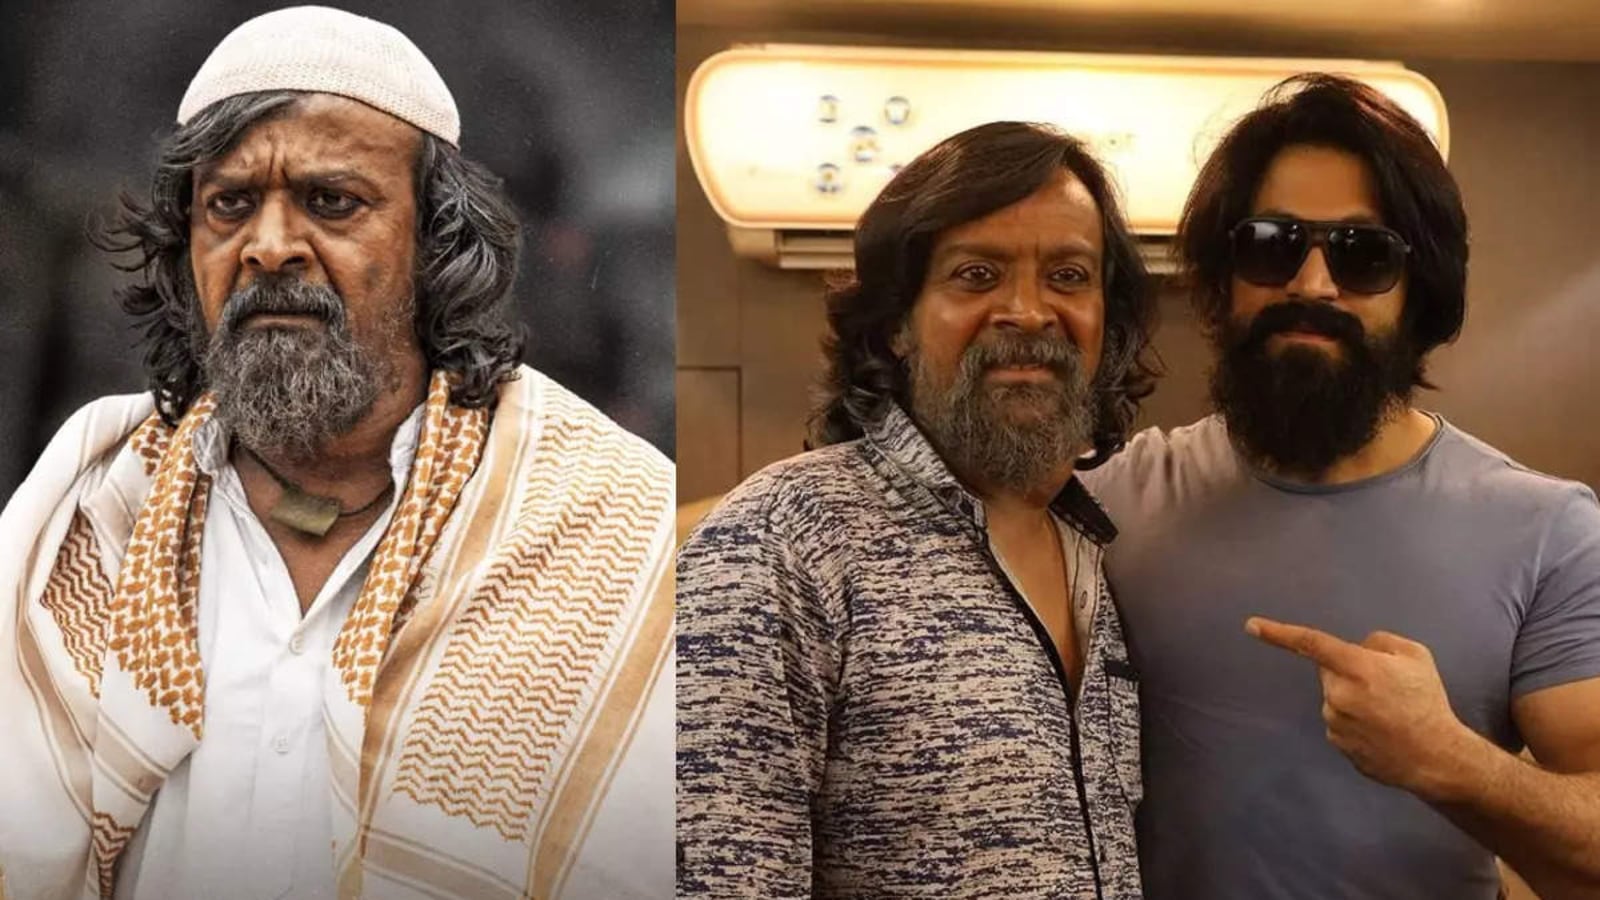 KGF actor Harish Rai reveals he has cancer, kept beard in film to hide  swelling - Hindustan Times